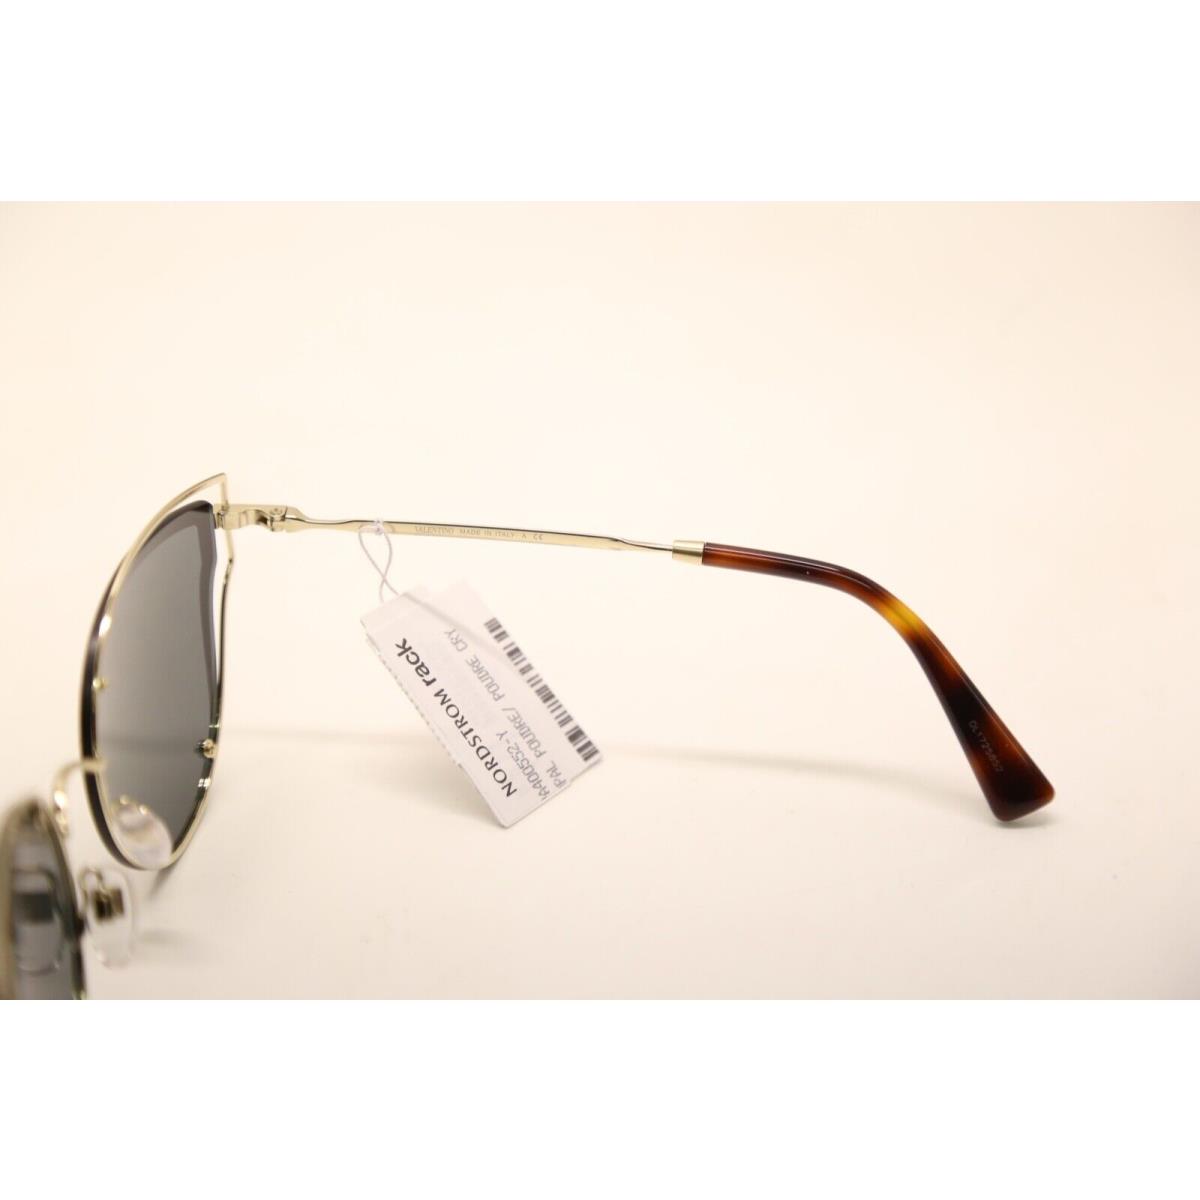 Valentino sunglasses  - PINK/GOLD Frame, Gray Lens 3